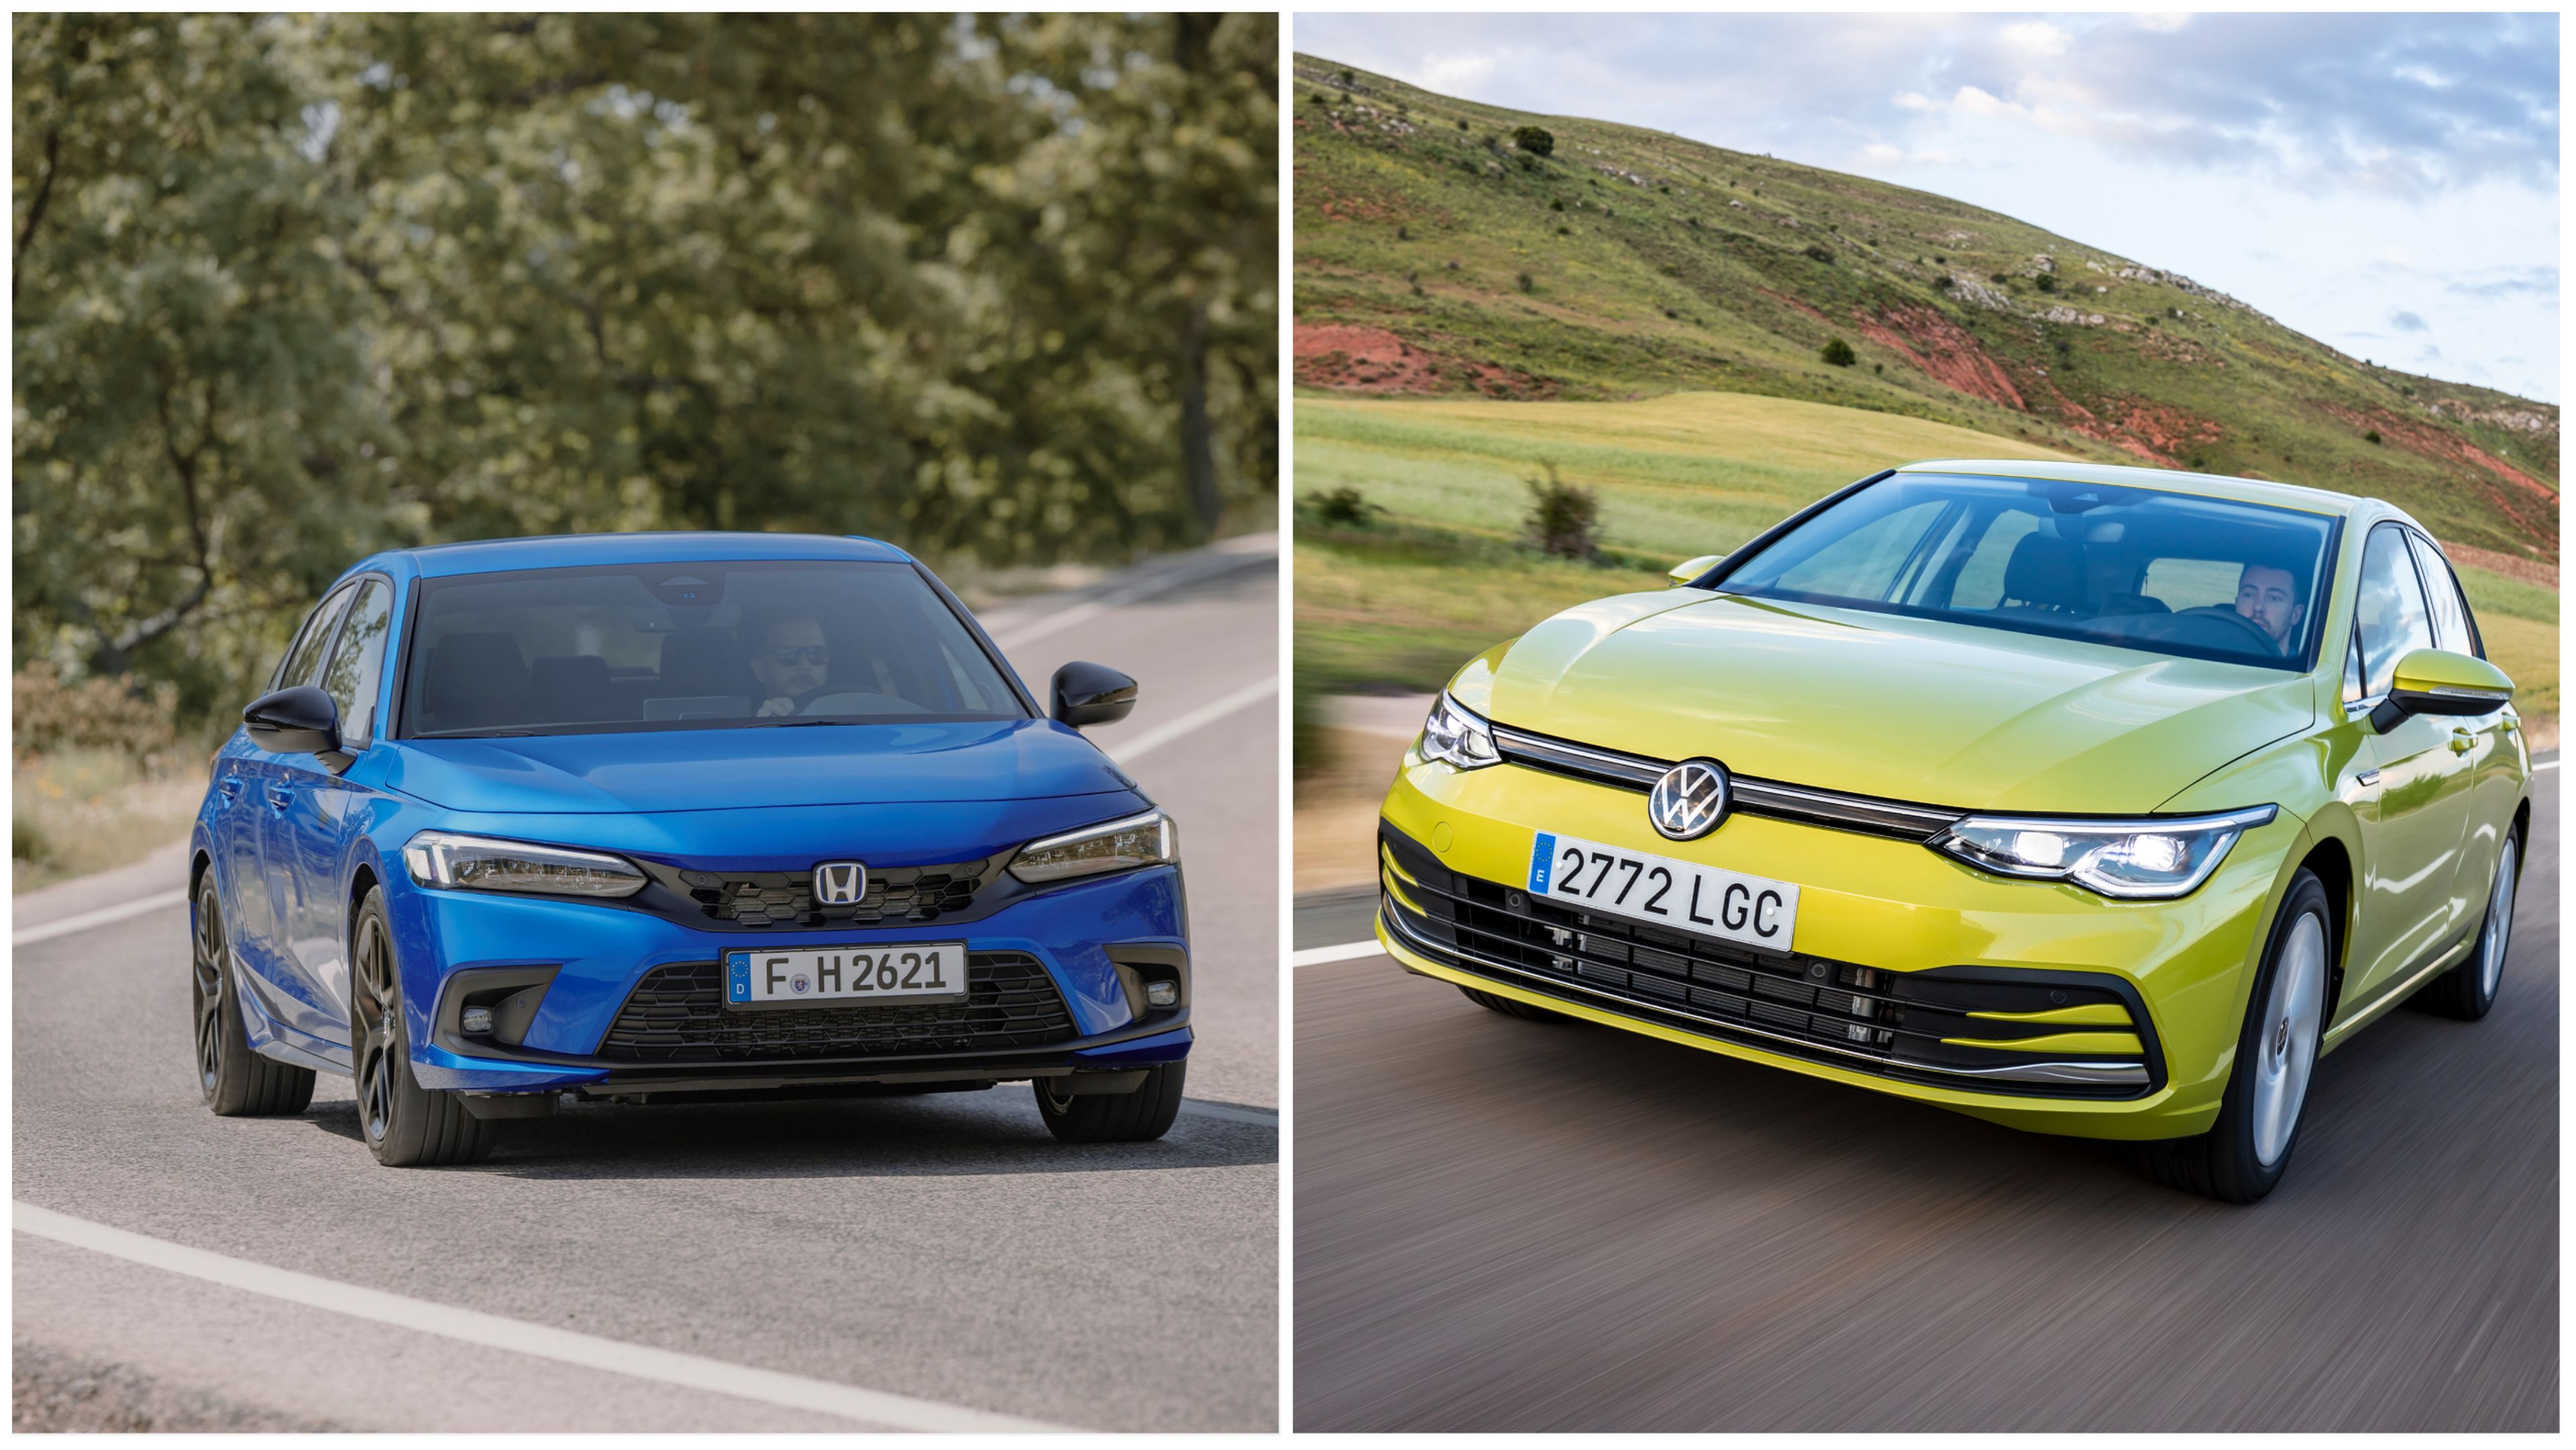 Honda Civic o VW Golf: ¿cuál elegir?